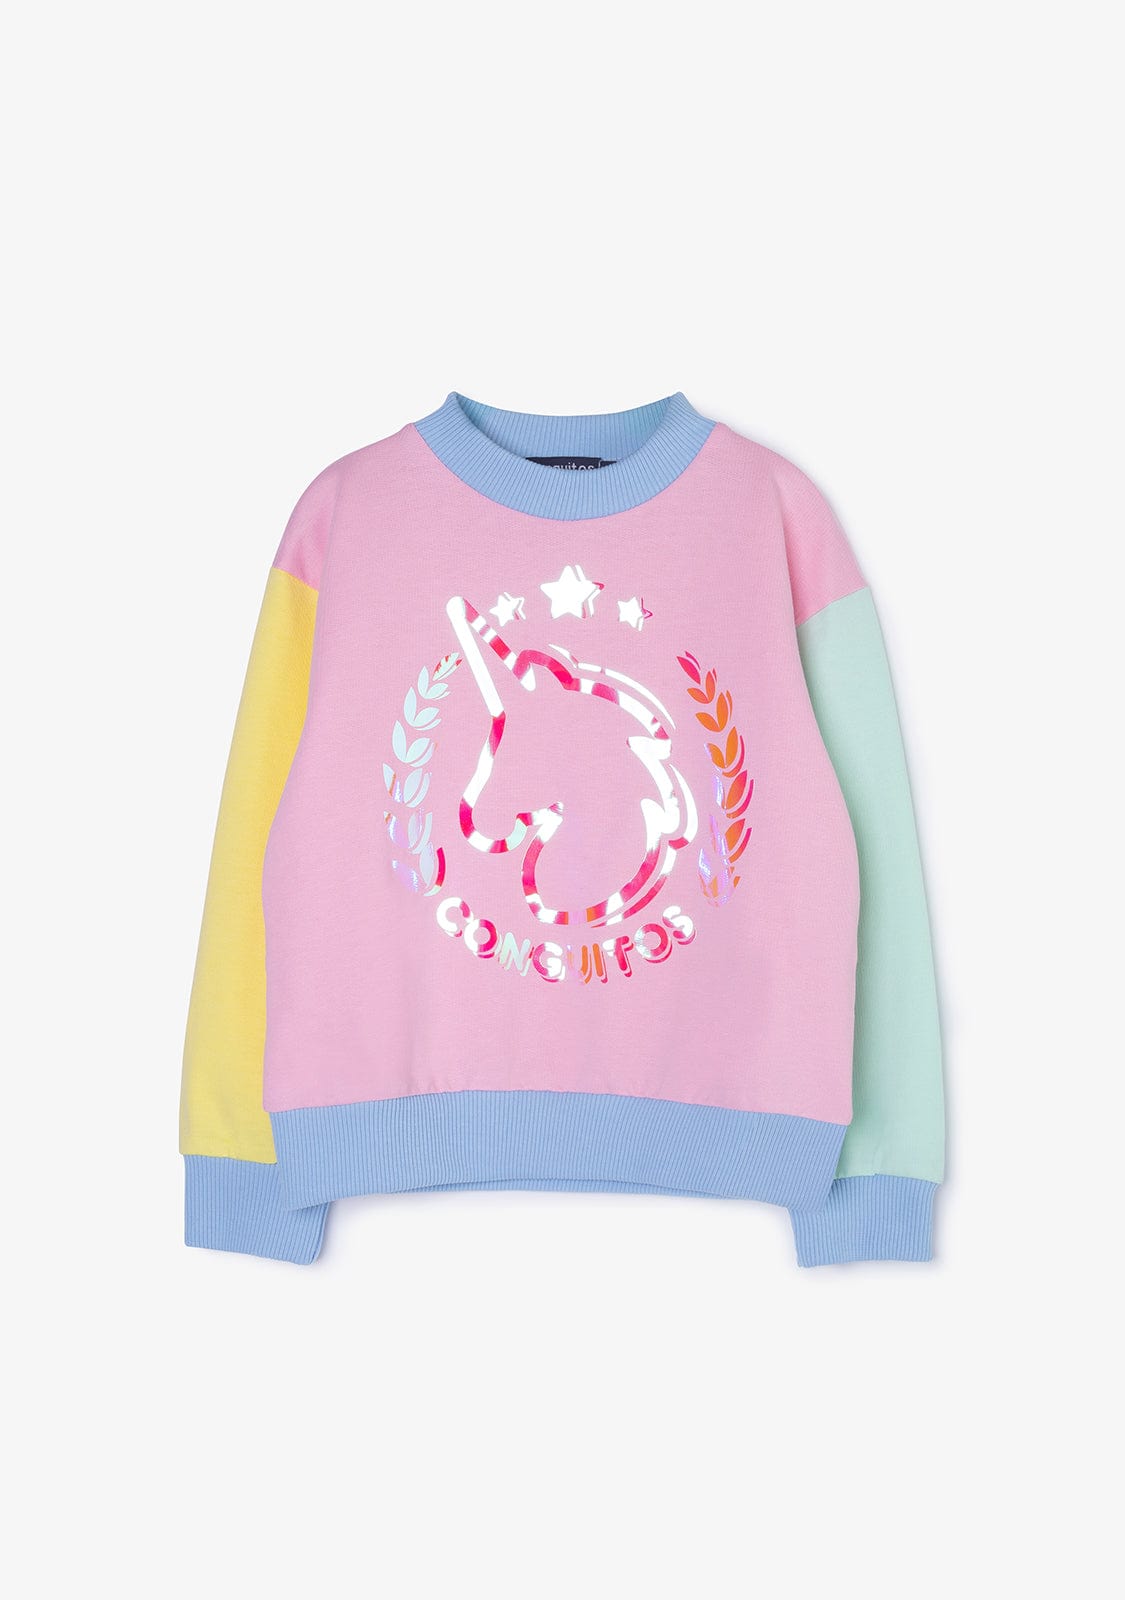 CONGUITOS TEXTIL Clothing Girl's Multicolour Unicorn Sweatshirt